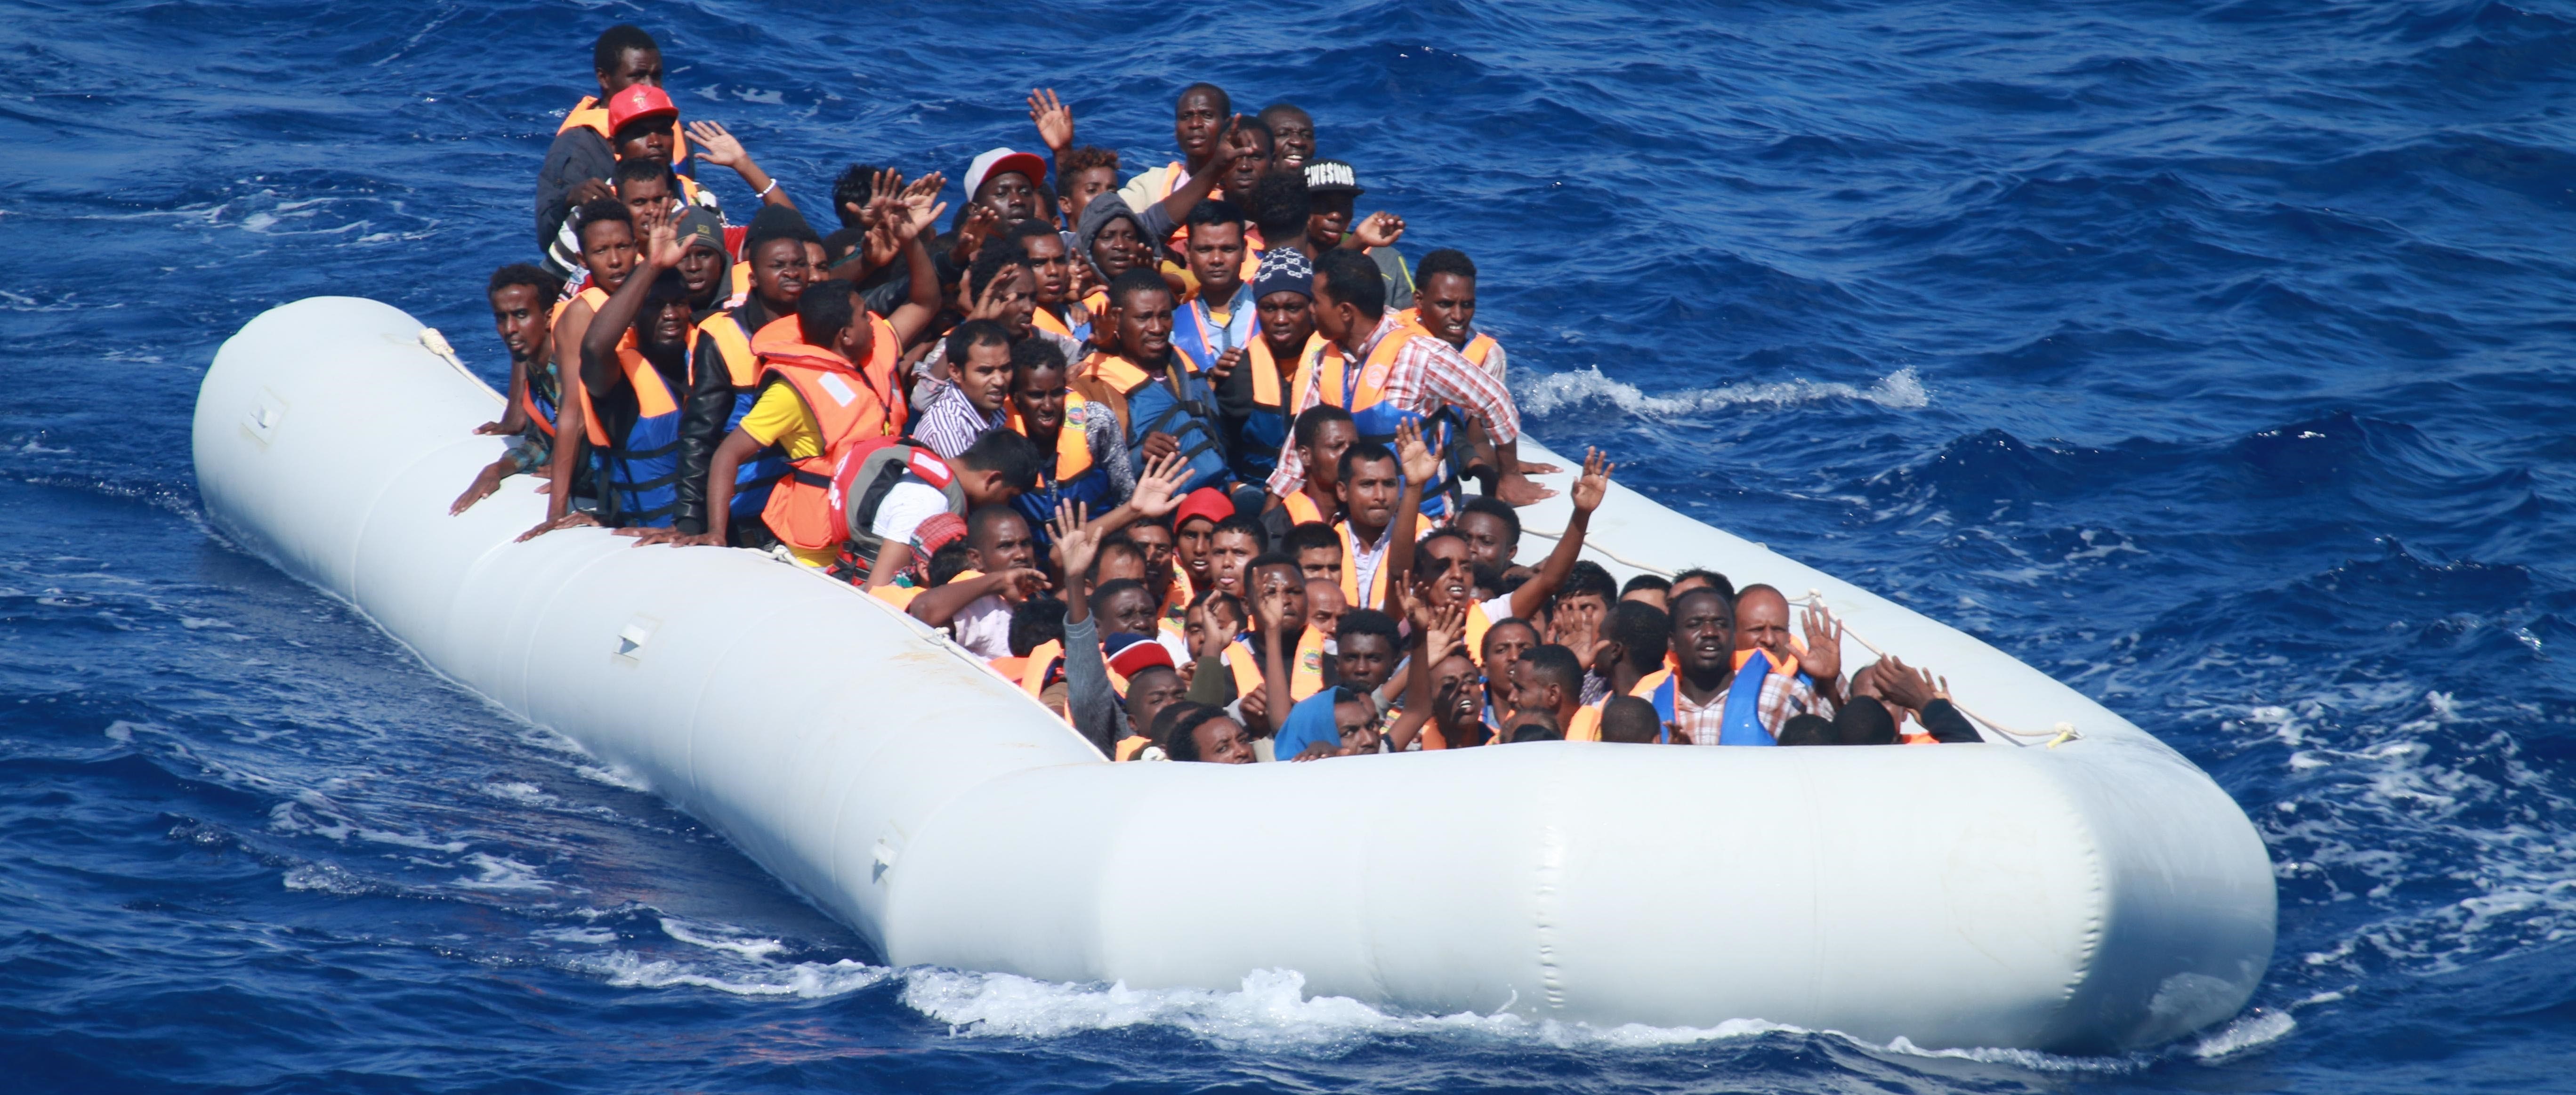 UN report blames EU and Libya for migrant deaths in central Mediterranean